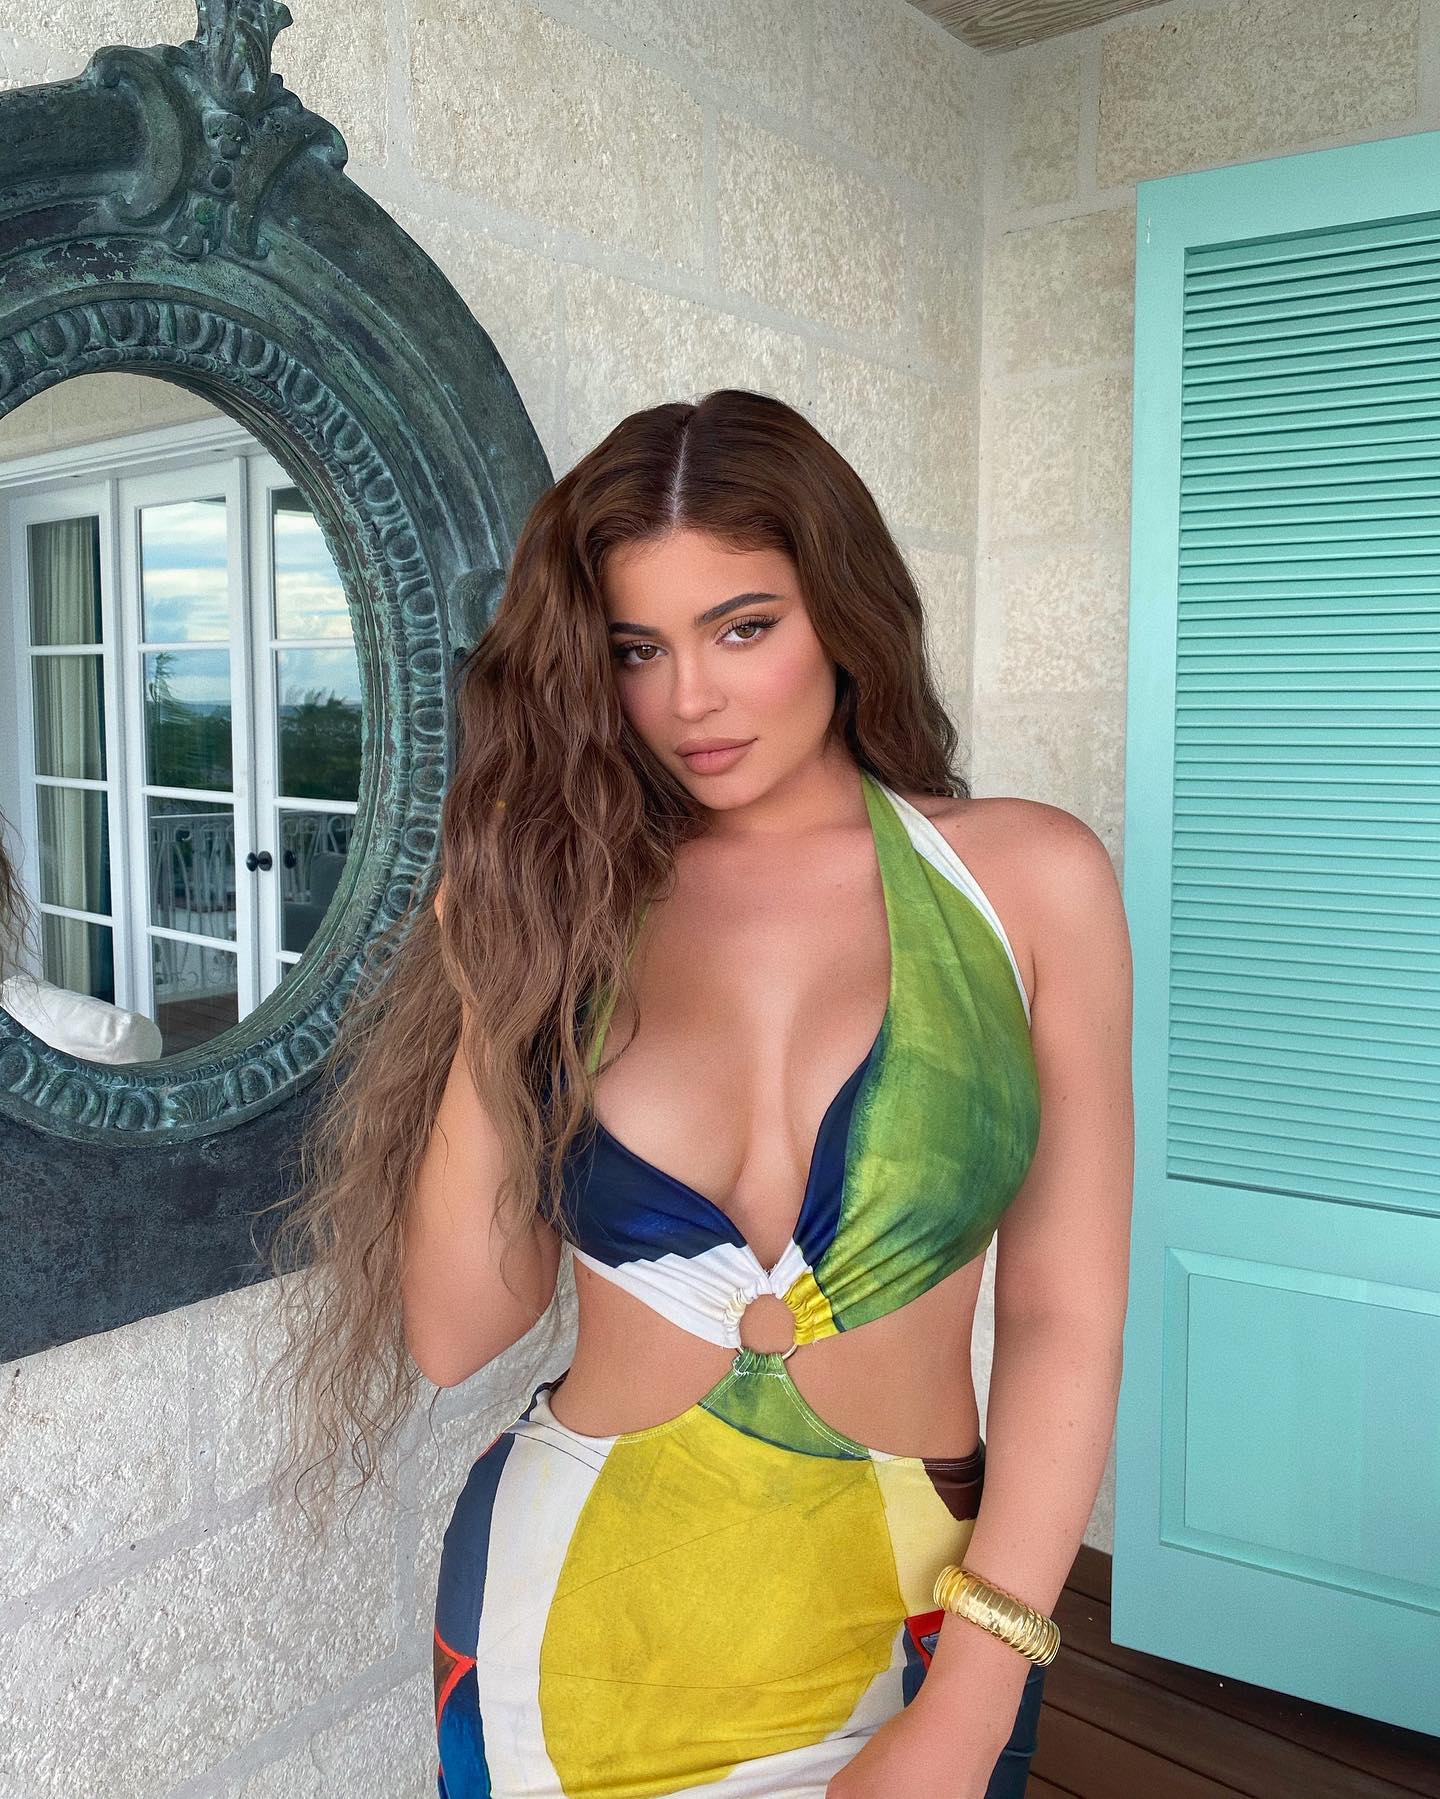 Photos n°3 : Kylie Jenner in the Caribbean!